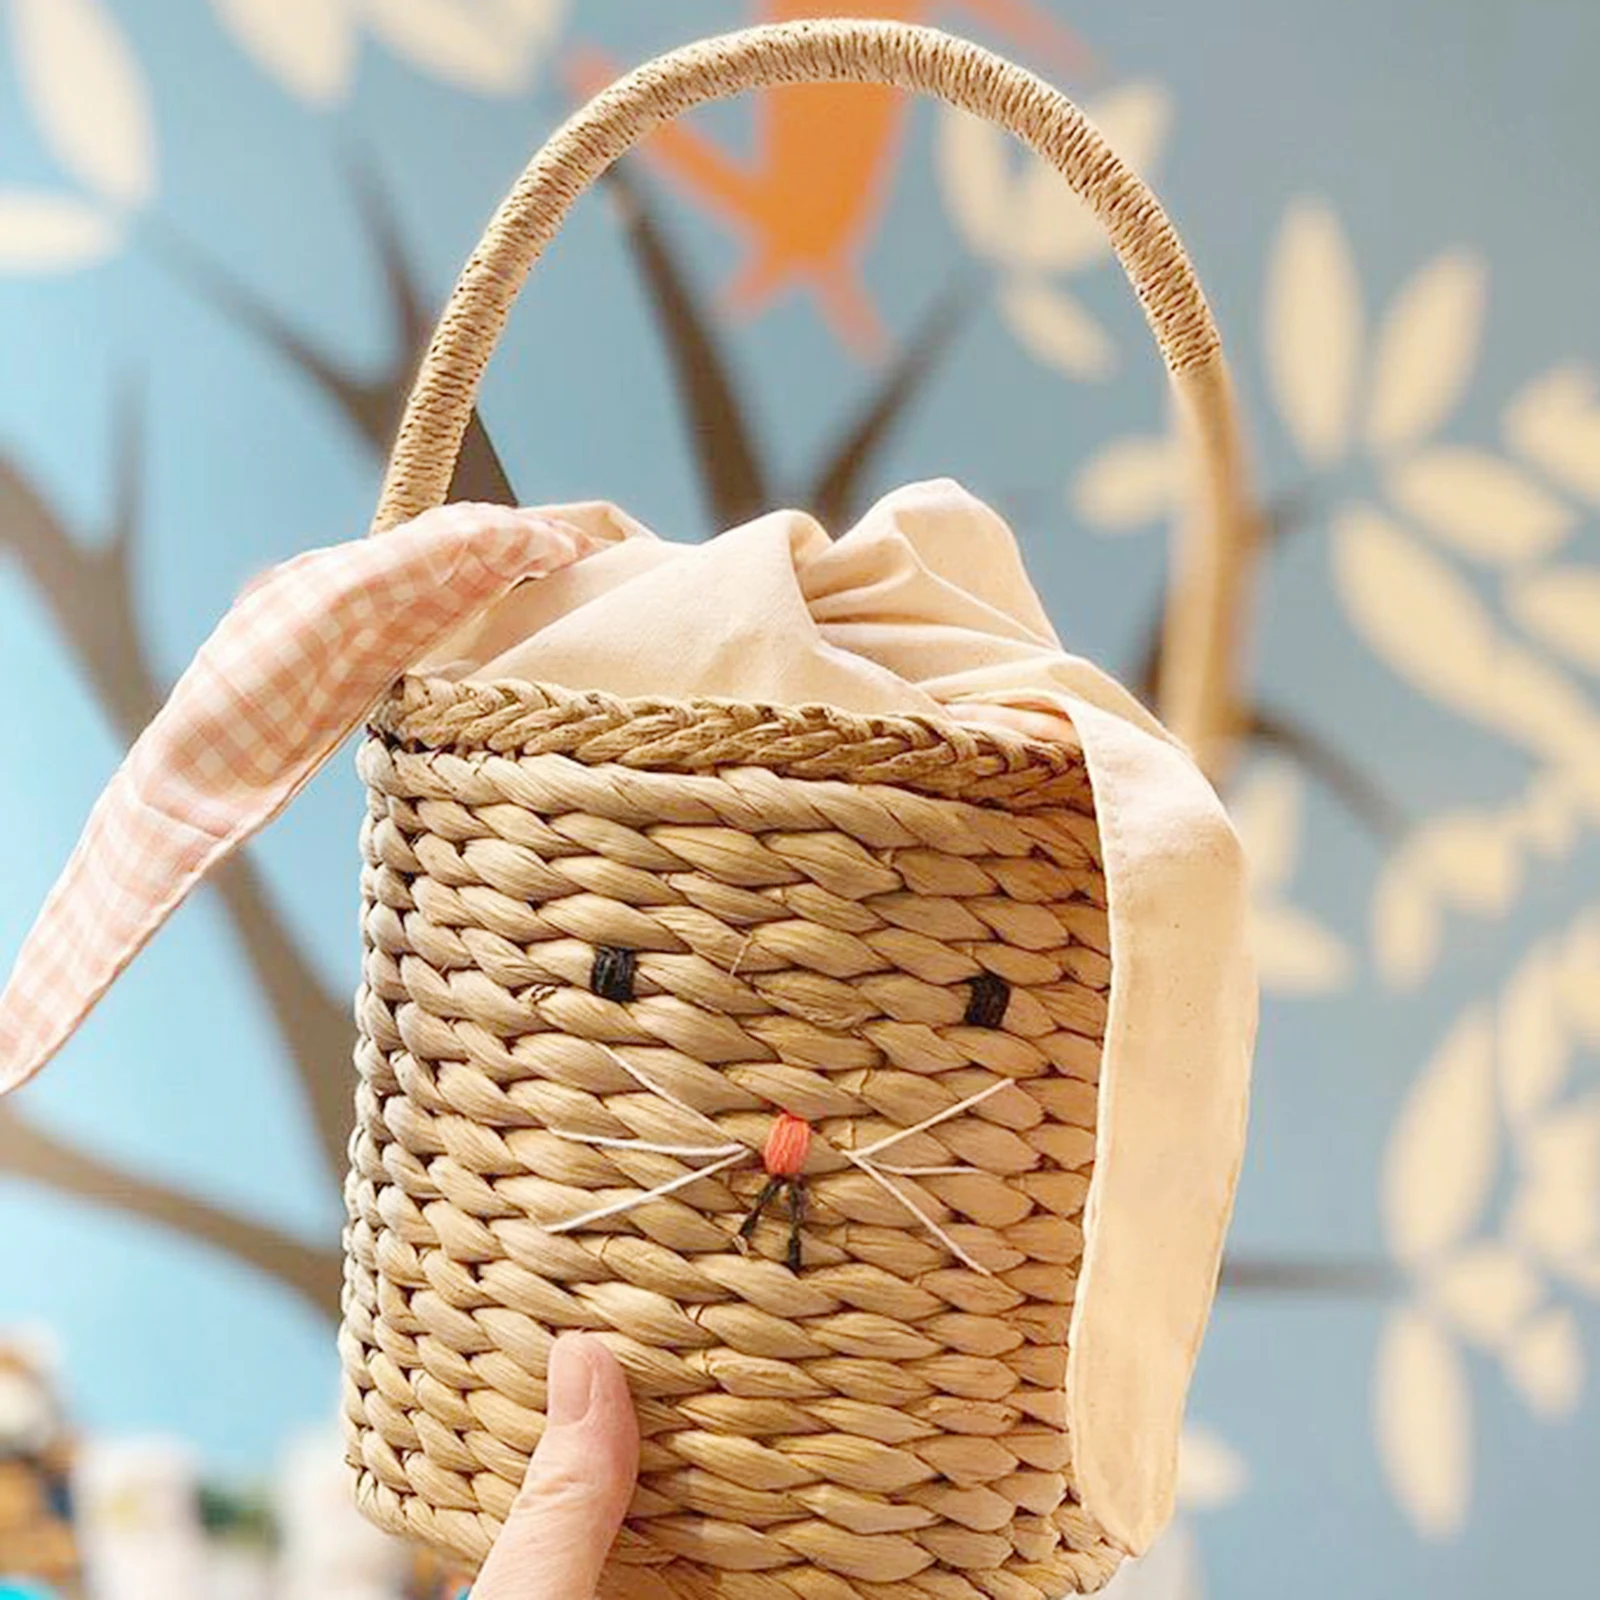 Women Girls Straw Bag Spring Summer Straw Purse Rabbit Ear Rattan Basket Large Woven Tote Handbag Photography props